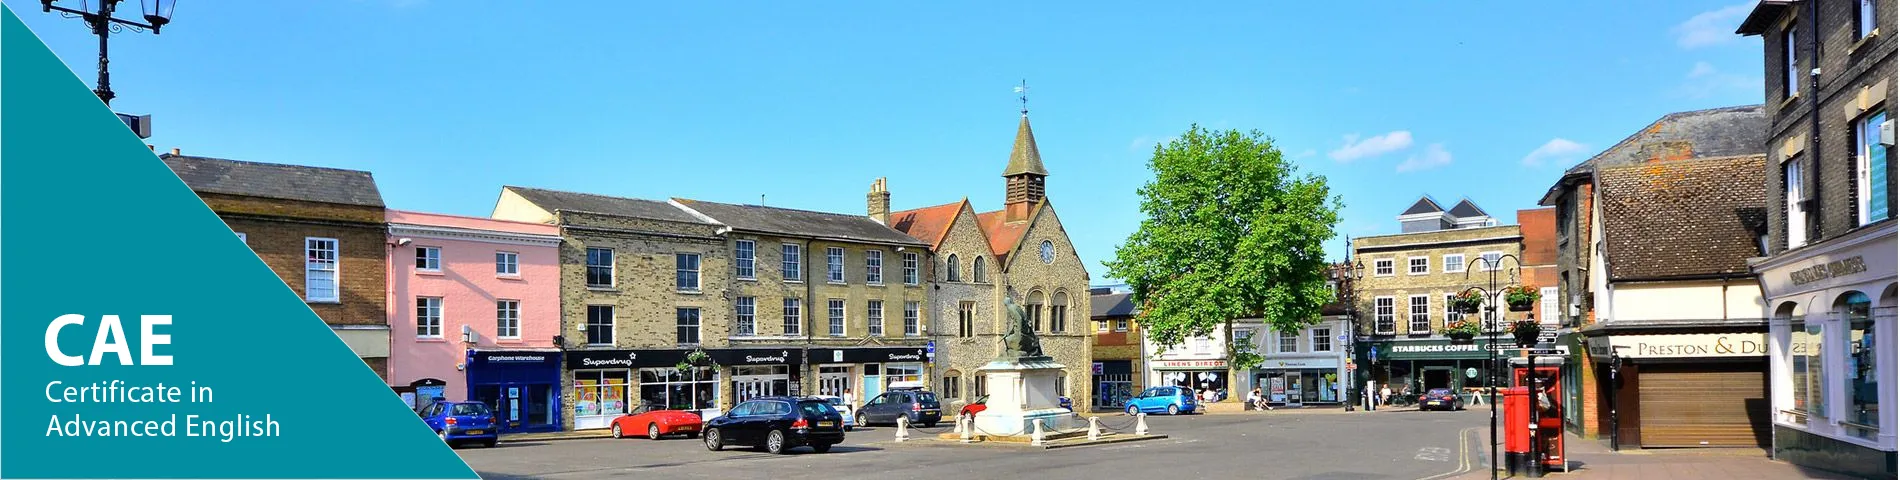 Bury St Edmunds - Cambridge Advanced